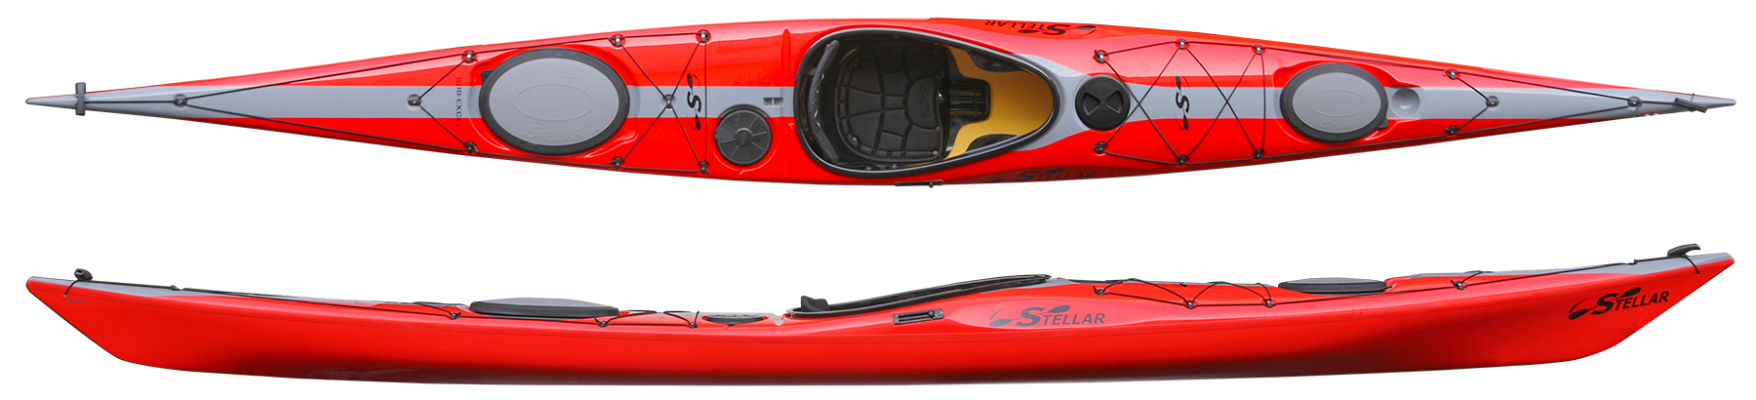 Stellar Intrepid 18′ Sea Kayak (SI18)  From $4,295